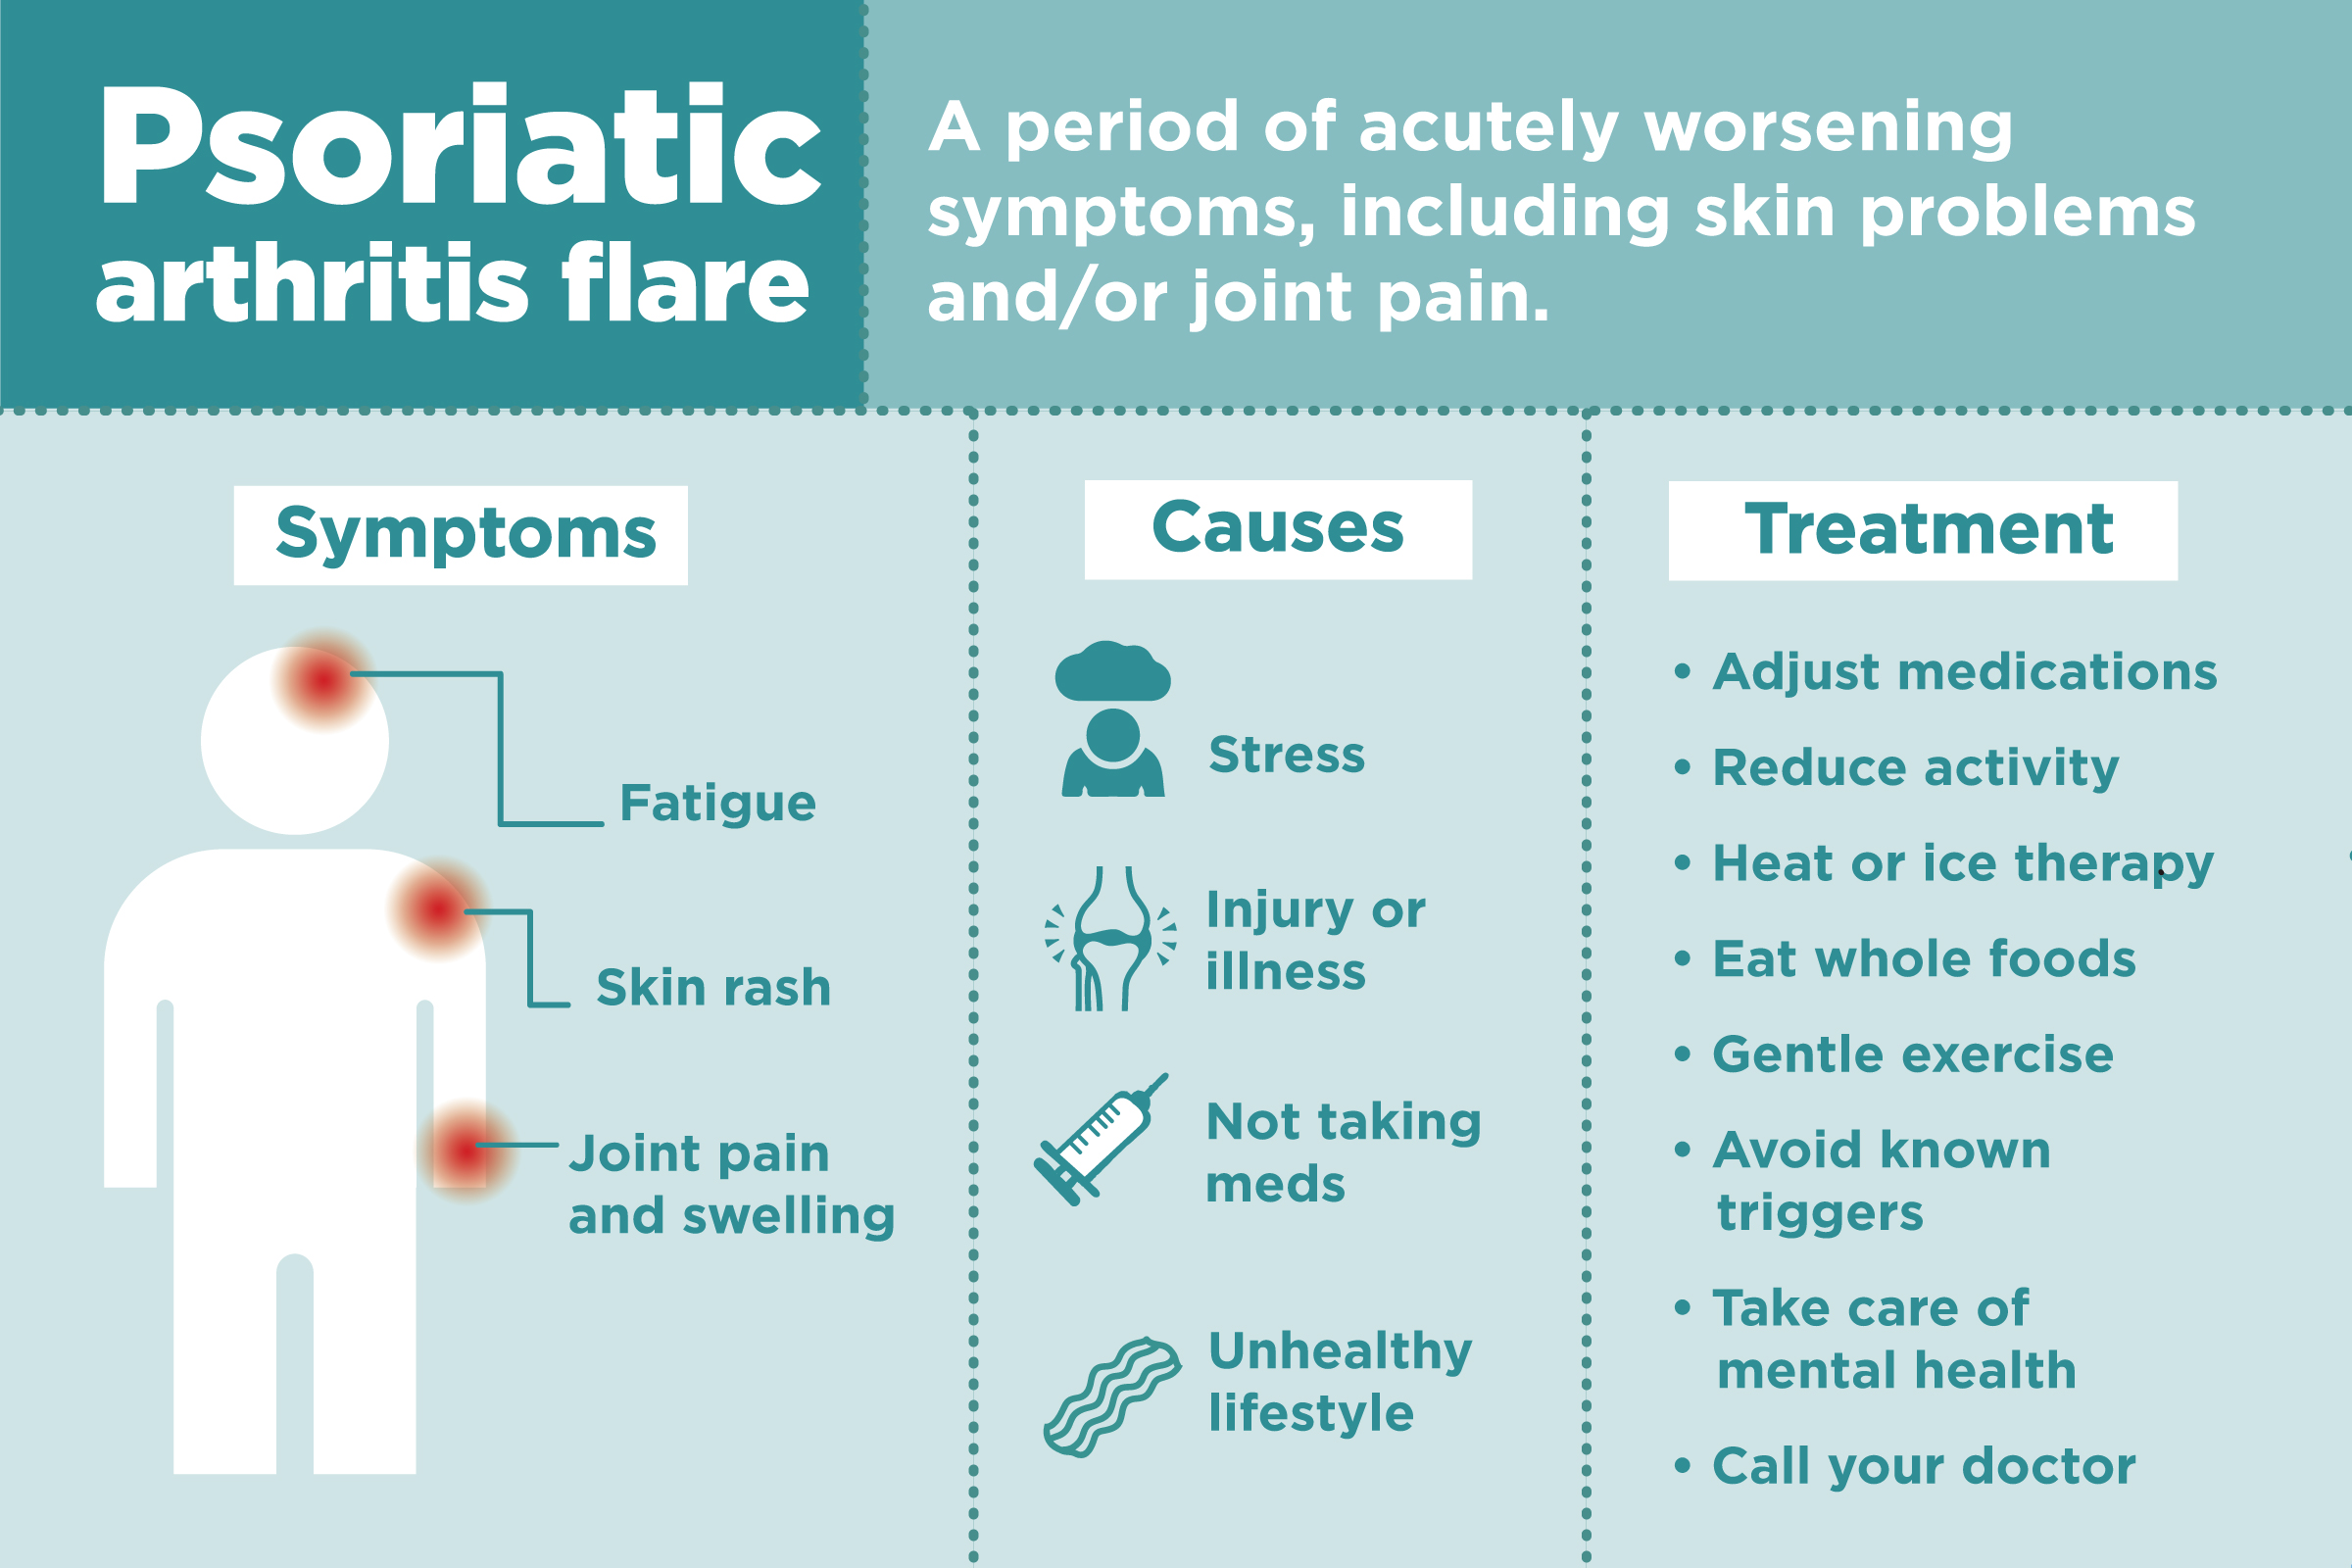 Efficacy of Acitretin in Severe Psoriasis